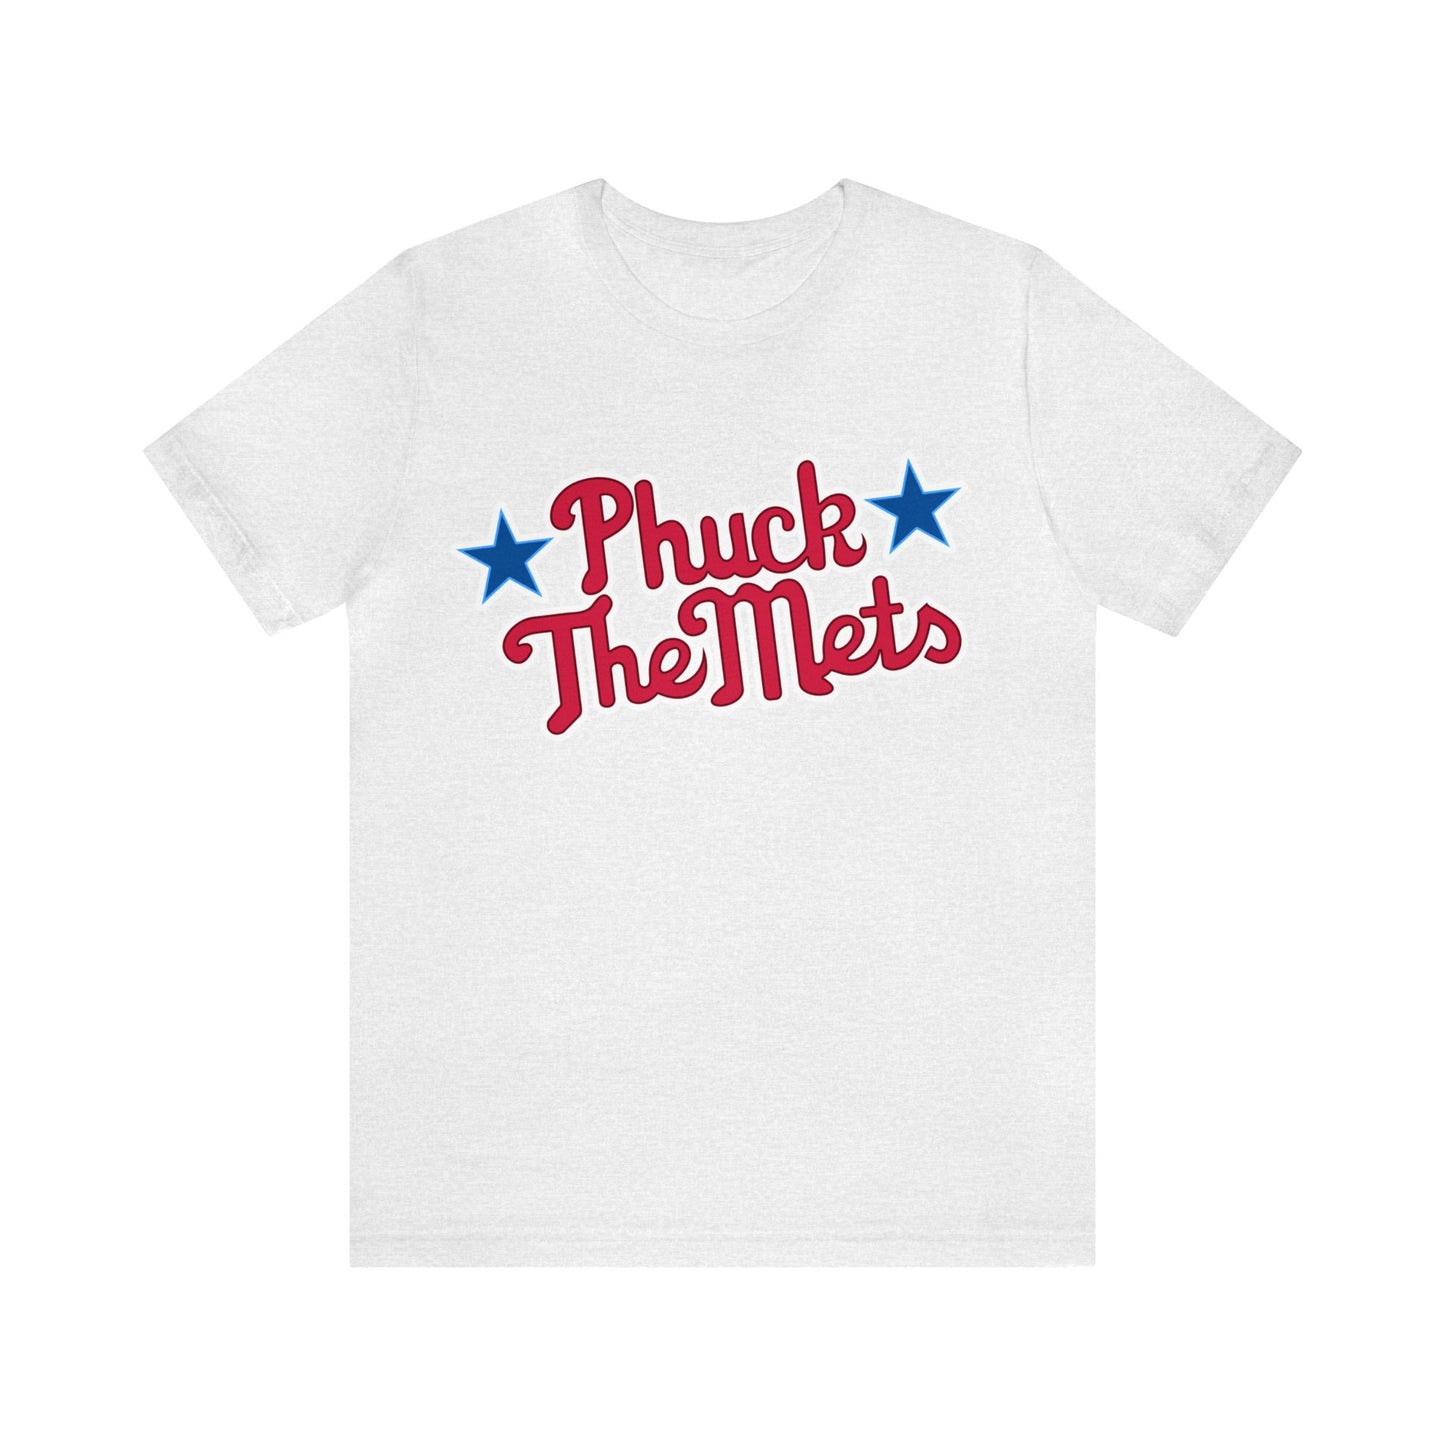 Phuck That NY Metro Team (Phillies Fan) - Unisex Jersey Short Sleeve Tee